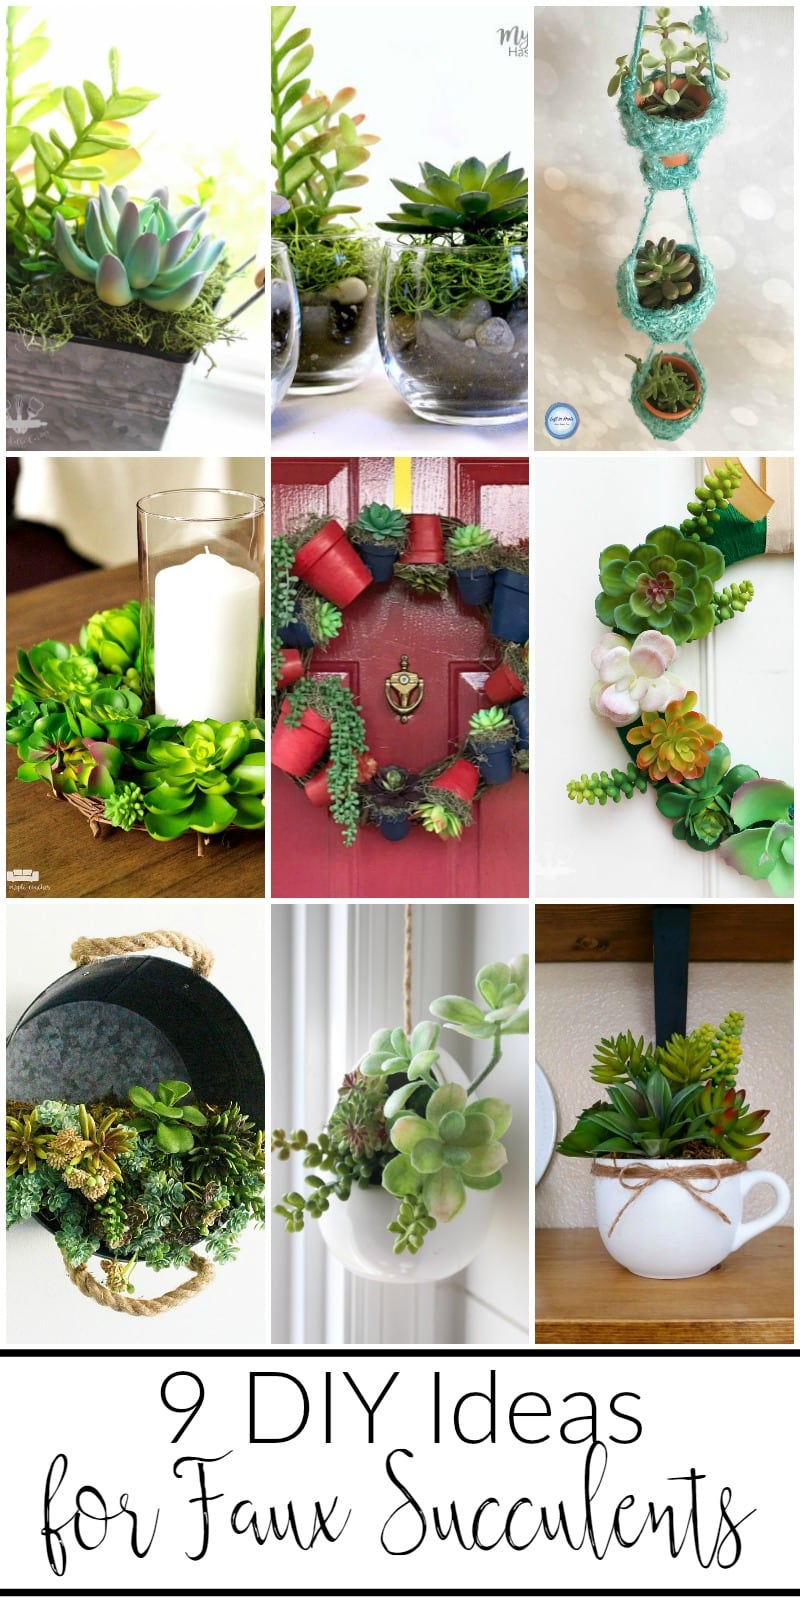 9 easy DIY ideas for faux succulents